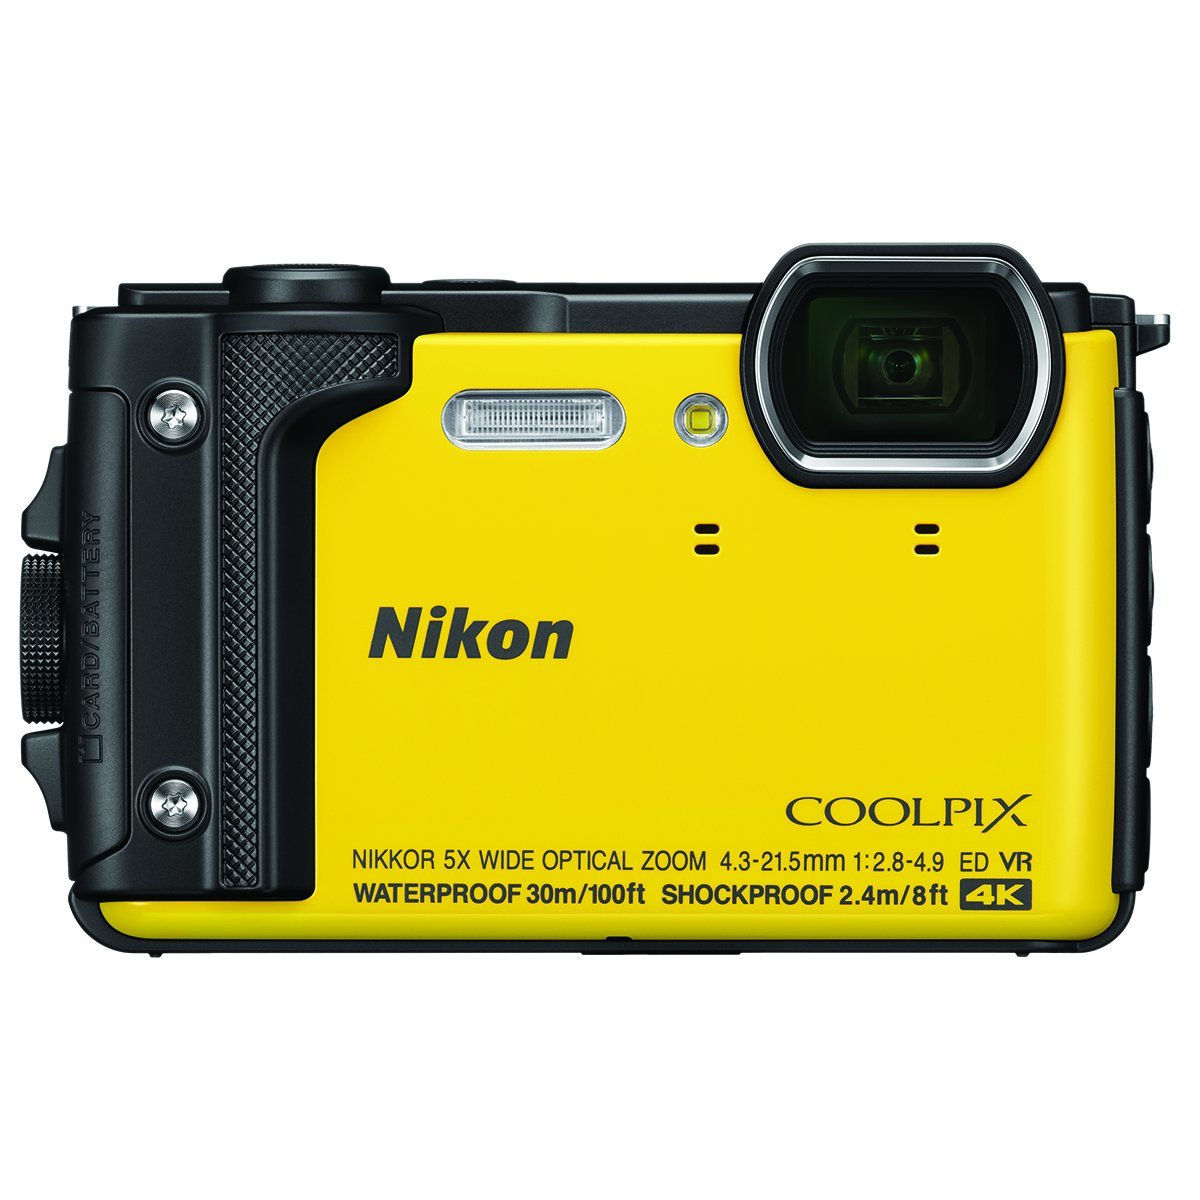 Cámara Nikon 16Mp Lcd 3 Wifi Sd W300 Y